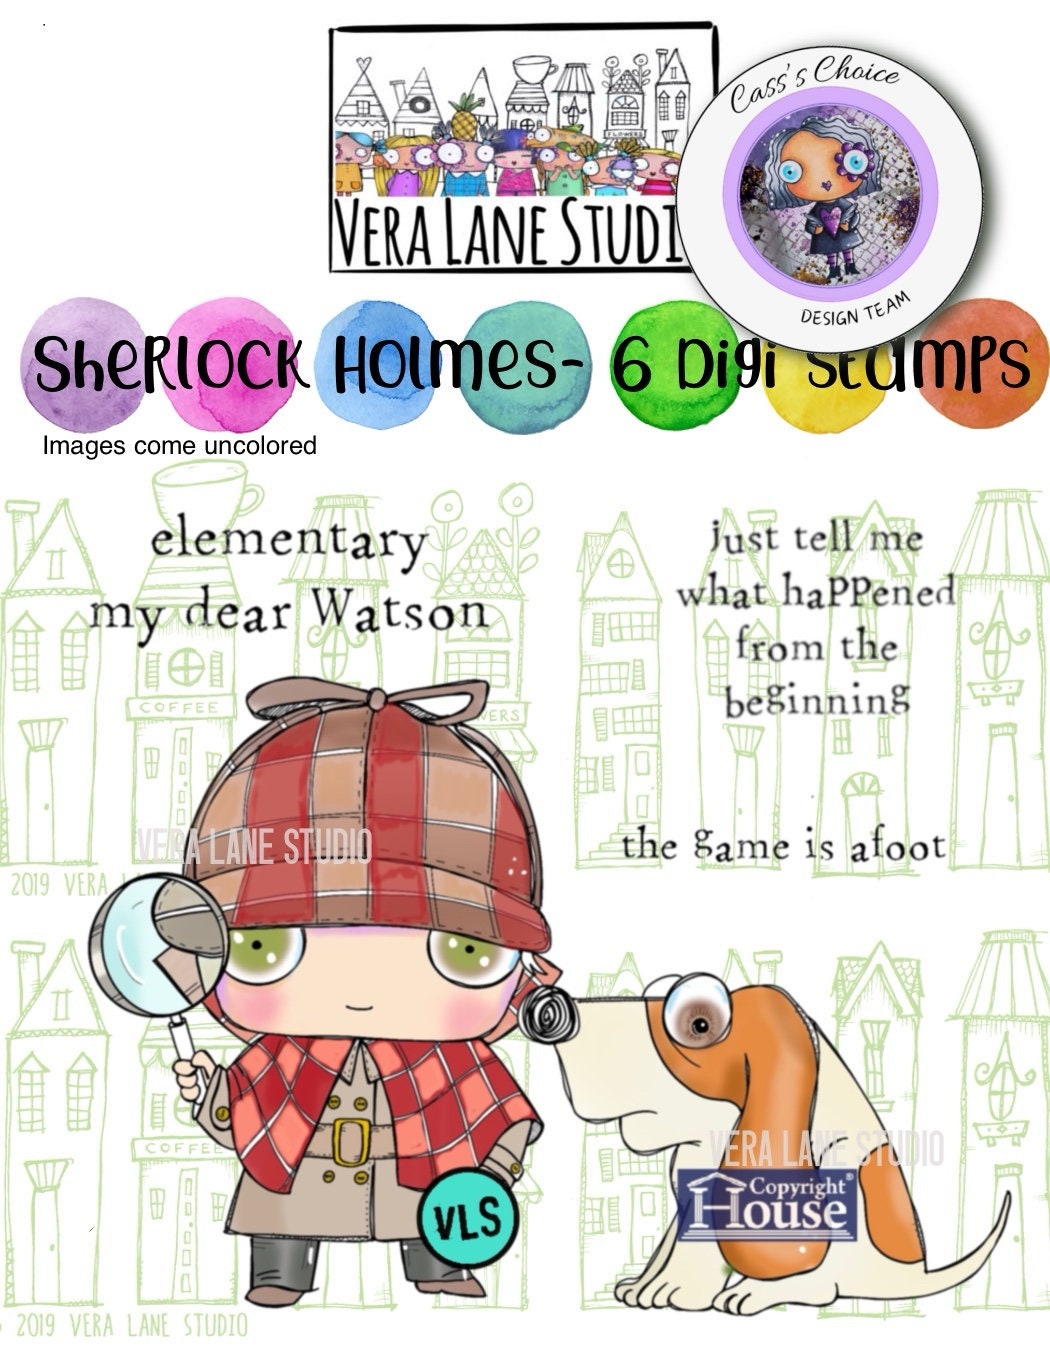 Sherlock Holmes - 5 digi stamps